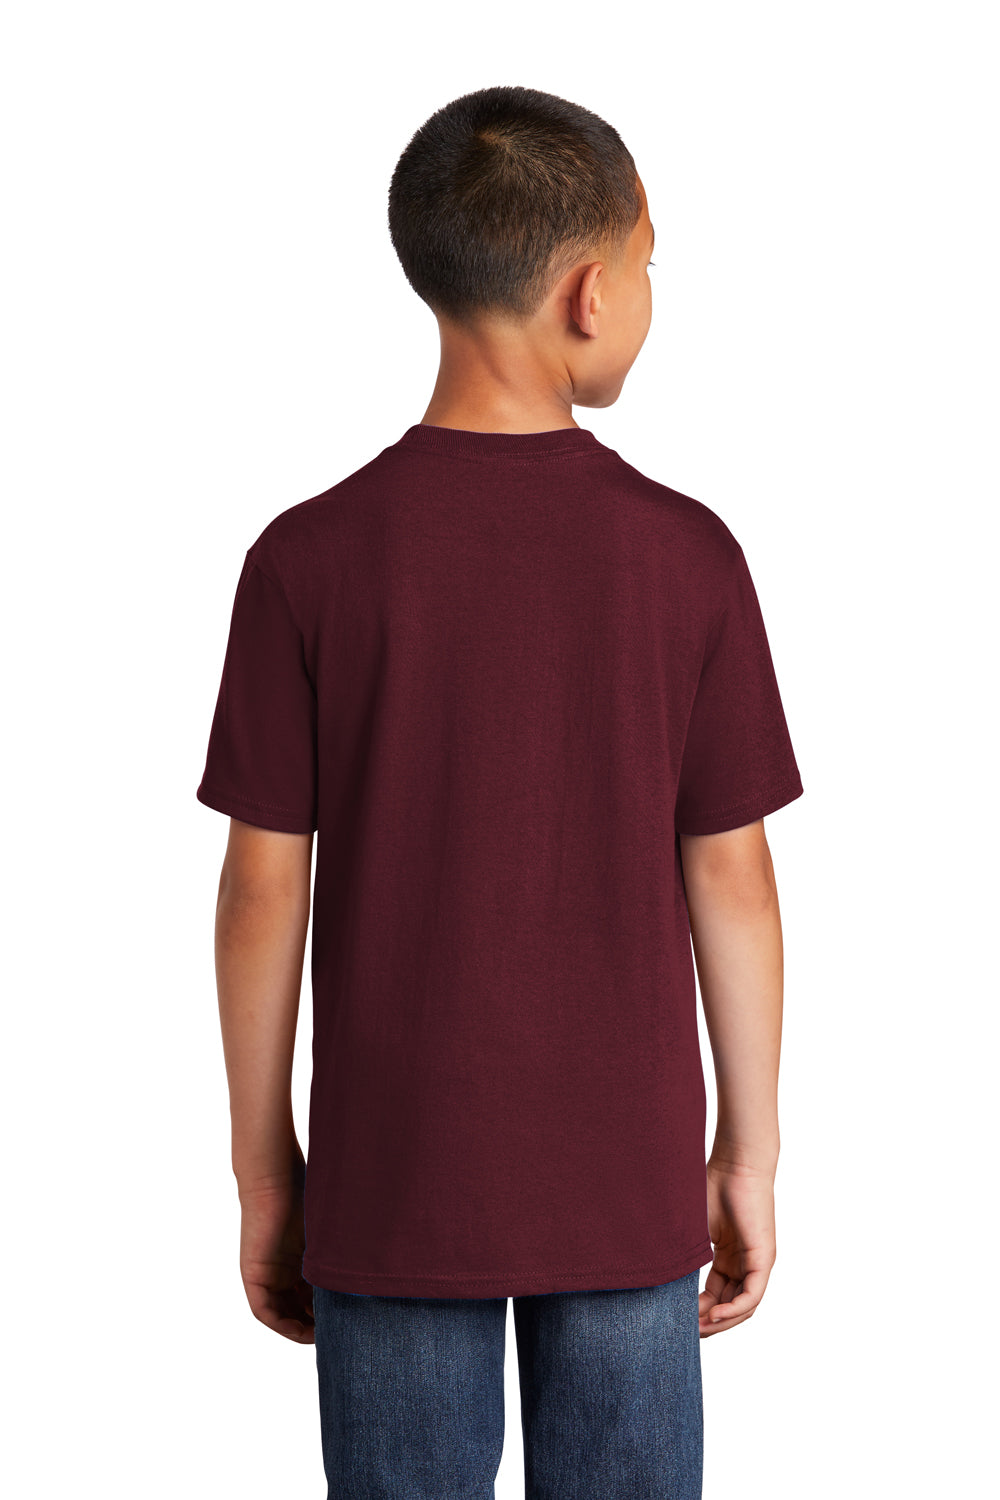 Port & Company PC54Y Youth Core Short Sleeve Crewneck T-Shirt Maroon Back